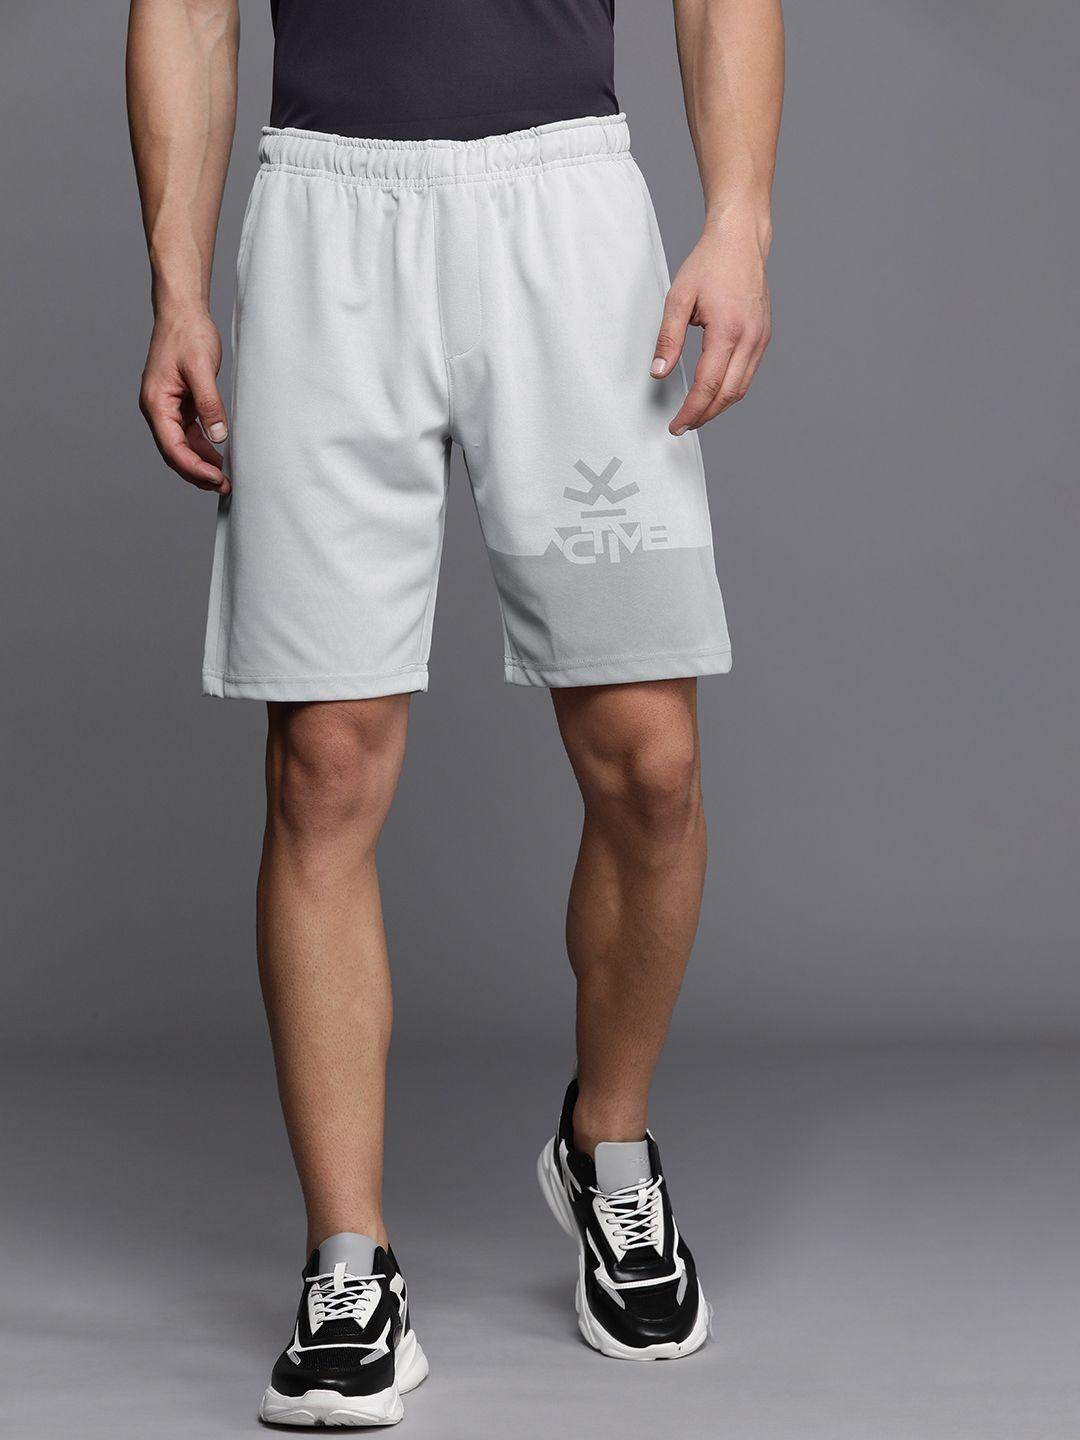 wrogn active men brand logo printed sports shorts